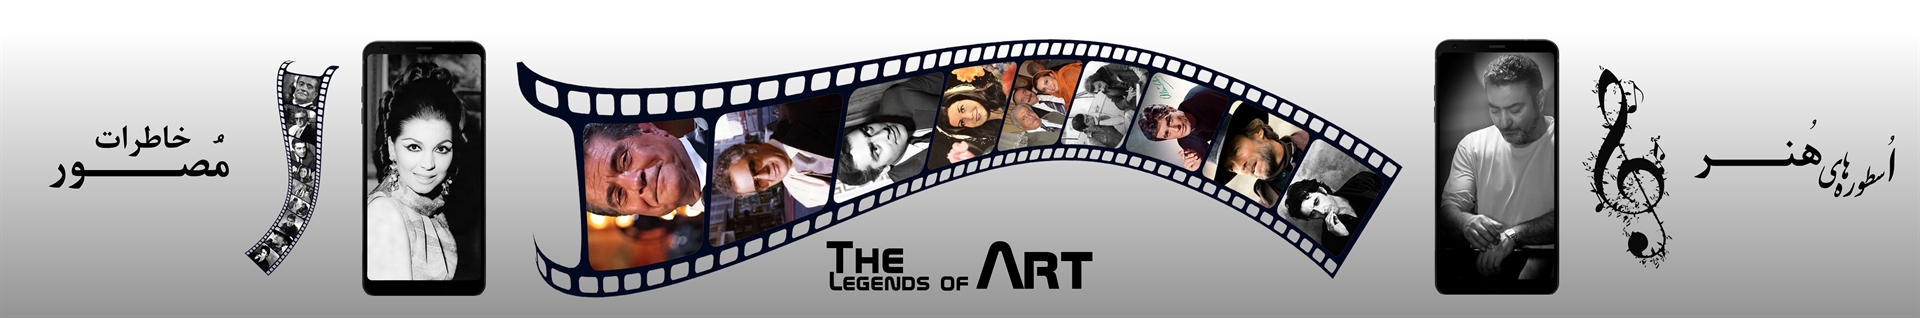 The Legends of Art